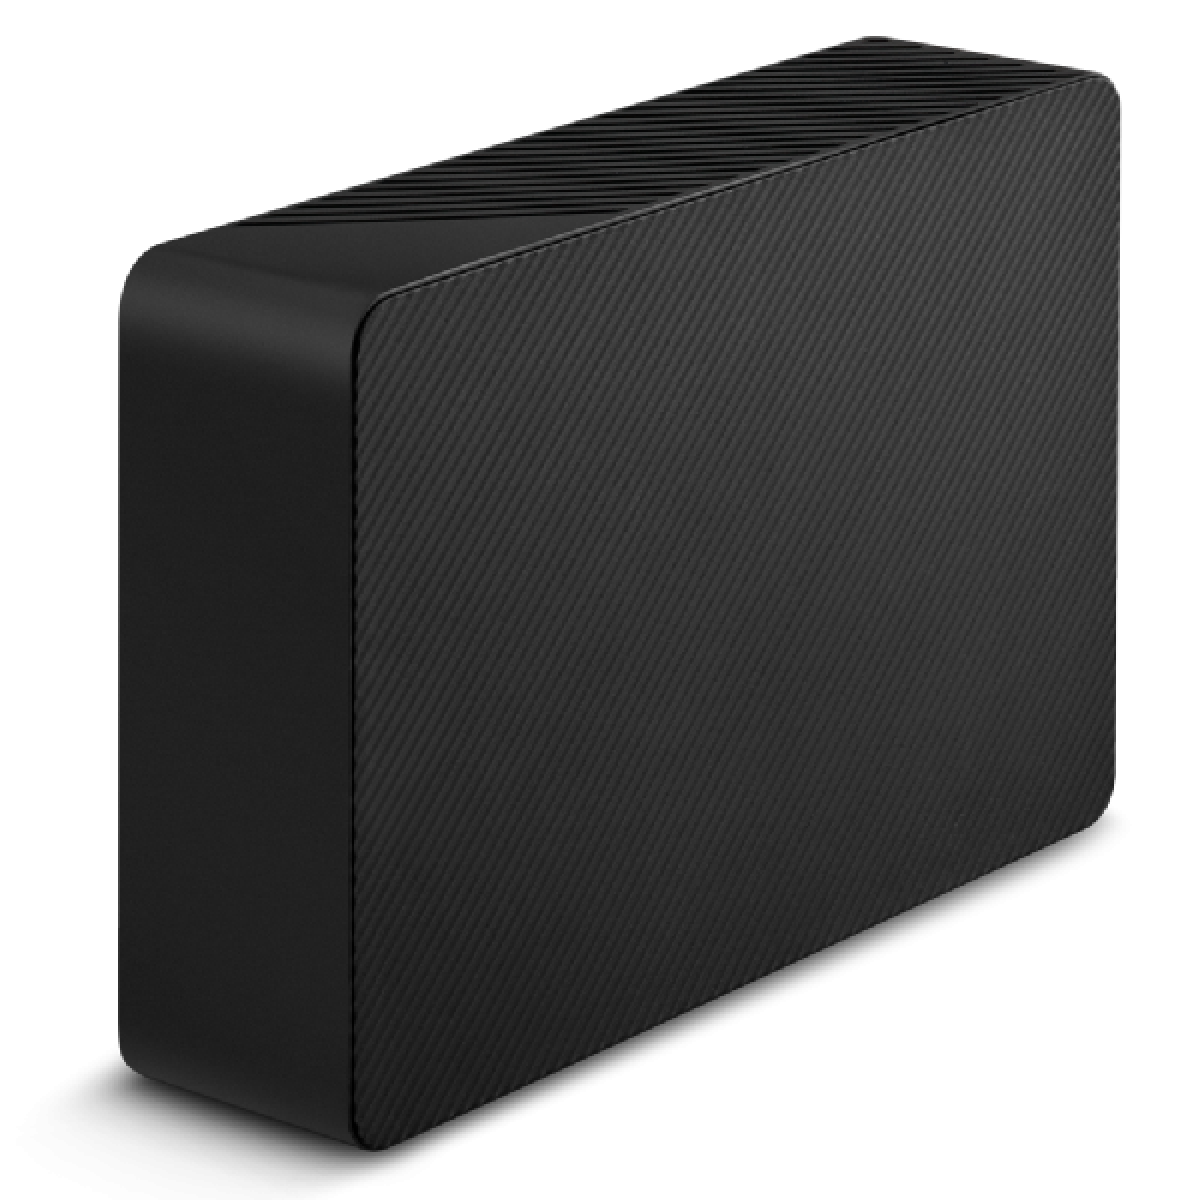 Seagate zunanji disk 10TB 8,89cm (3,5) Expansion Desktop USB 3.0